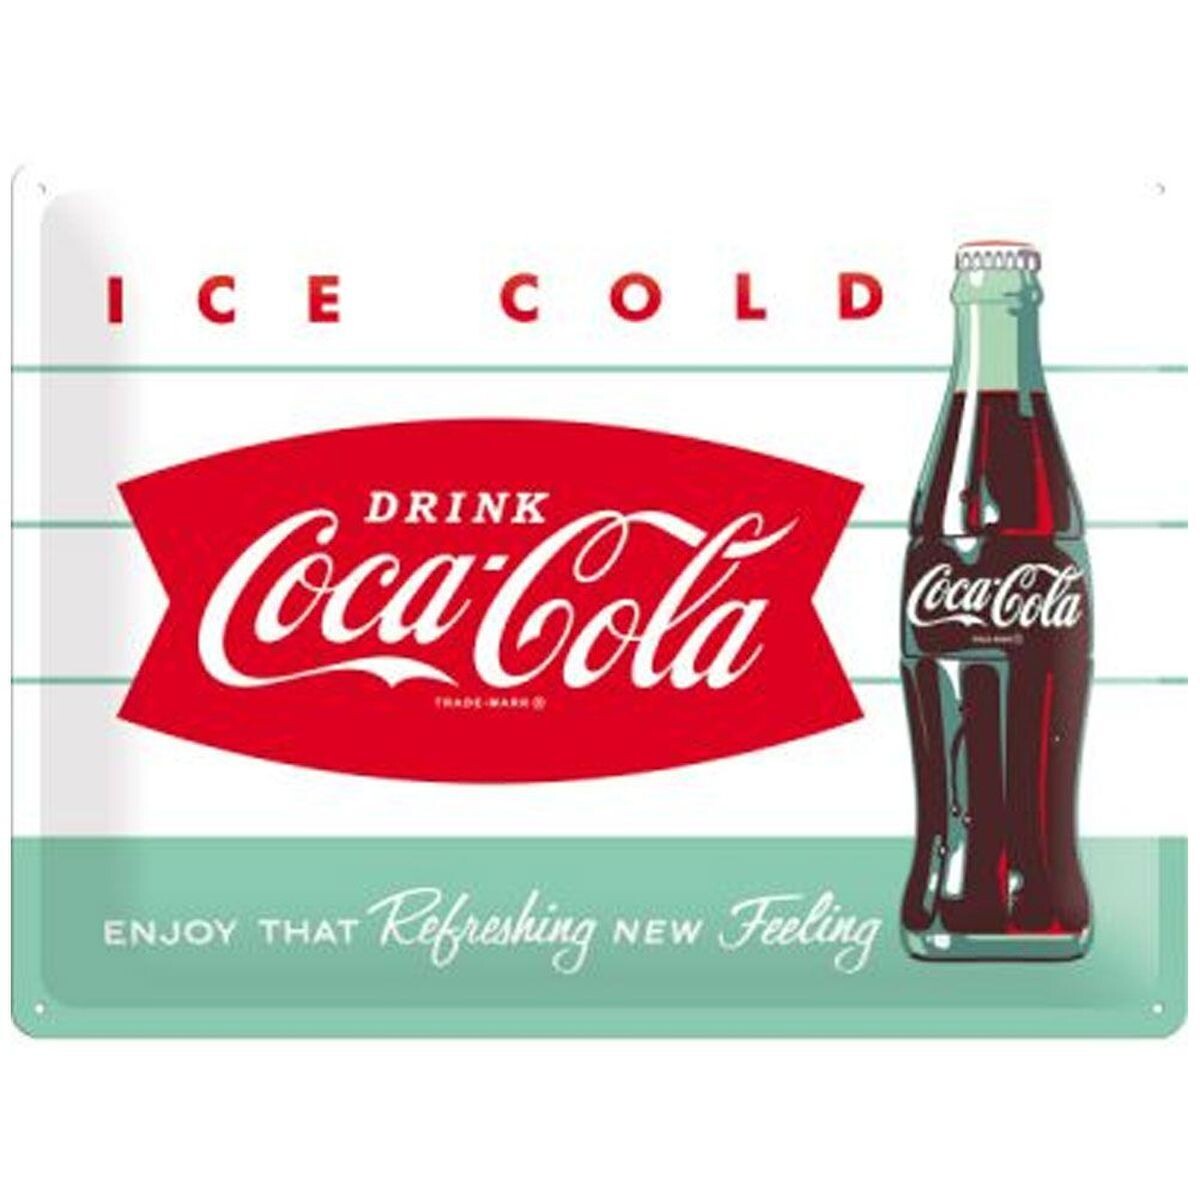 Plaque métal 30 x 40 cm - Coca-Cola - Ice cold